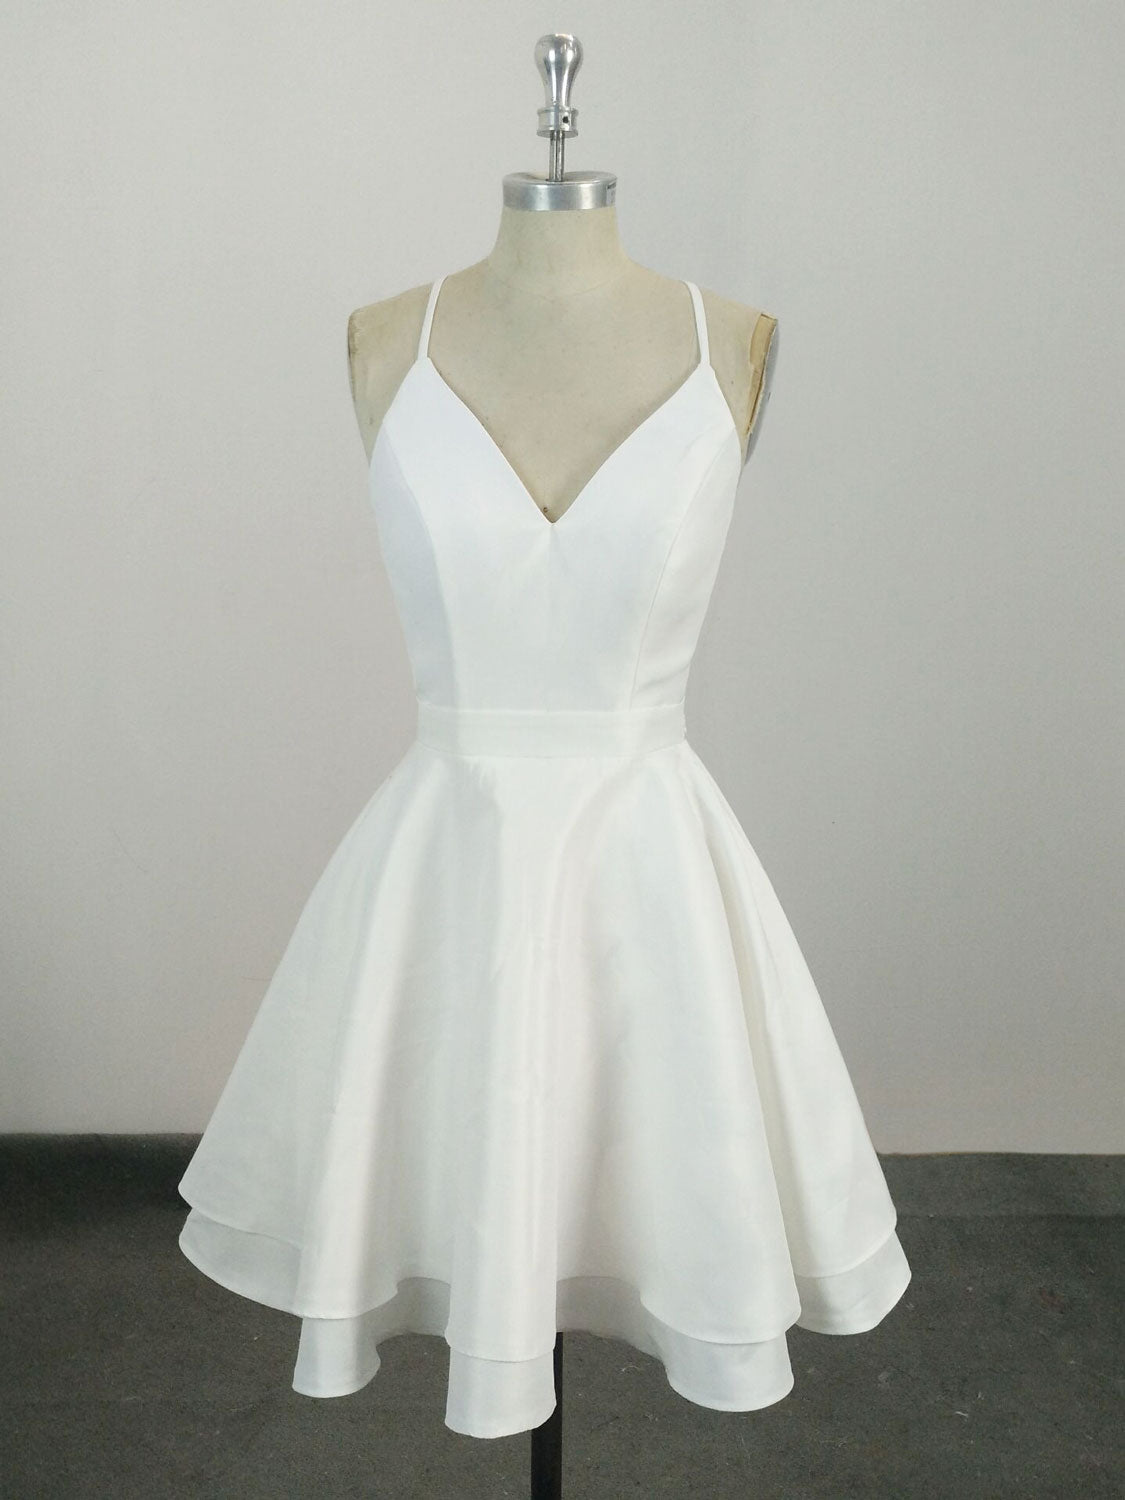 white v neck dress